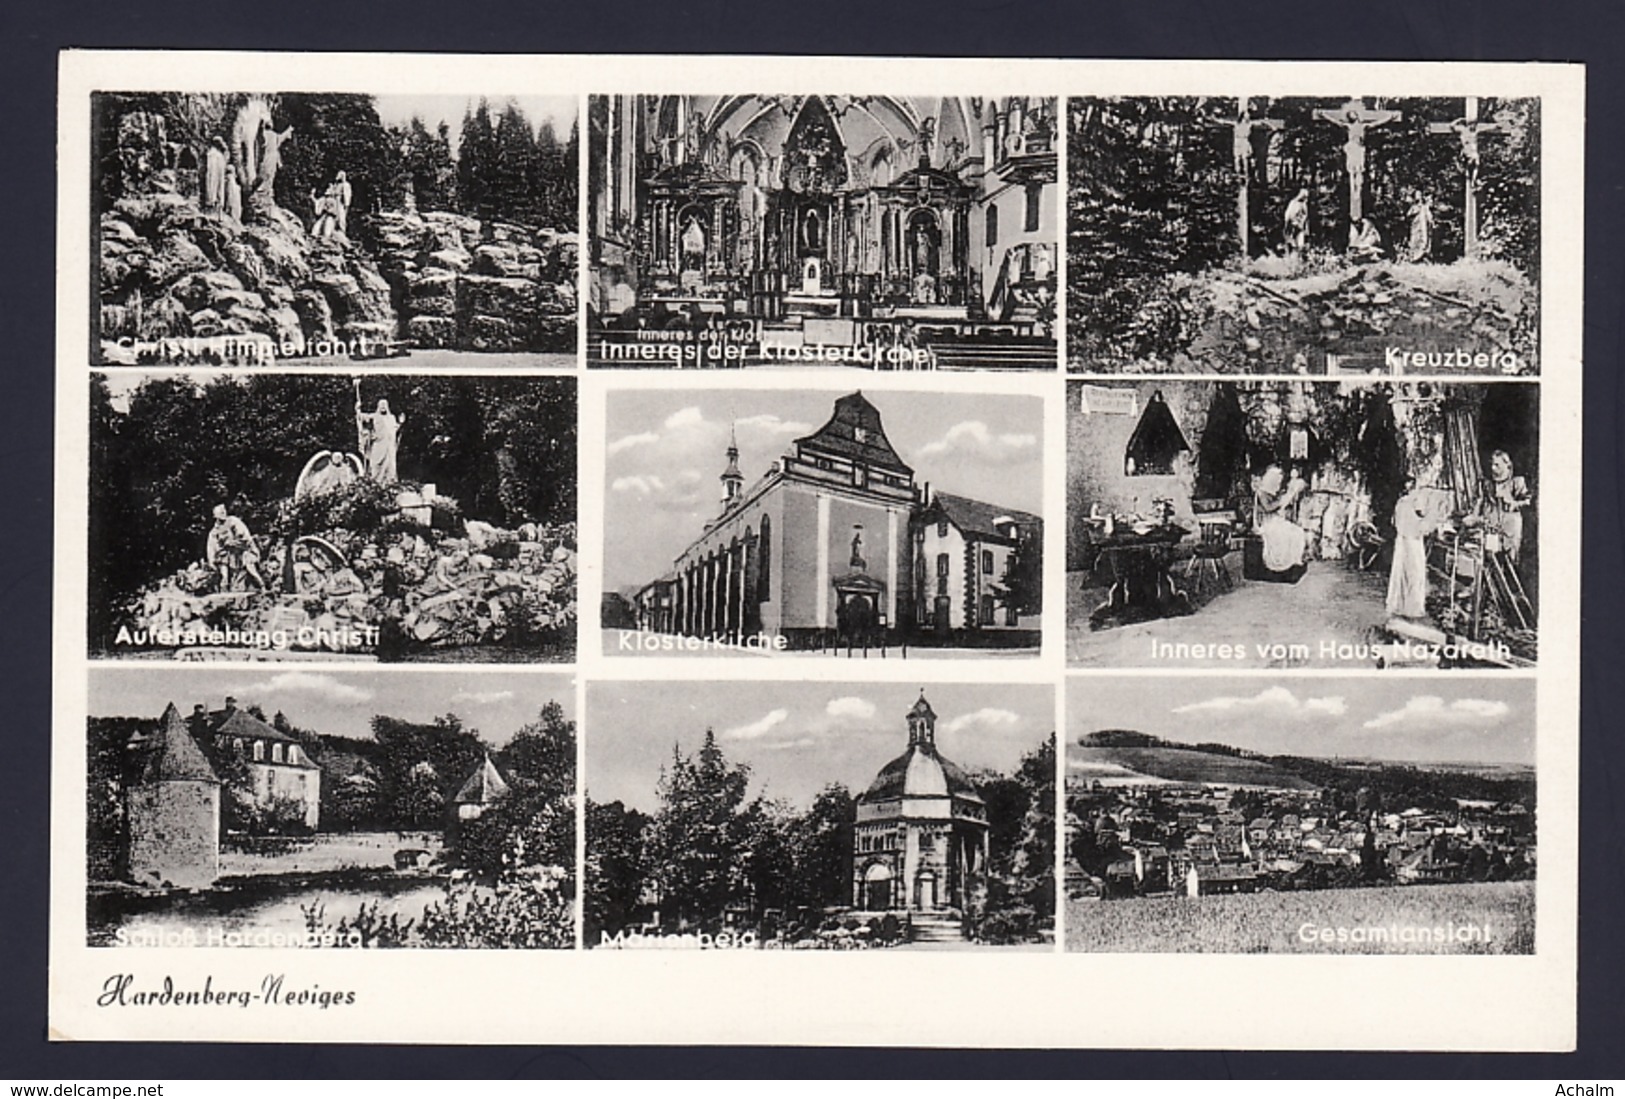 Hardenberg-Neviges - Wallfahrtsort - 9 Ansichten - 1955 - Velbert